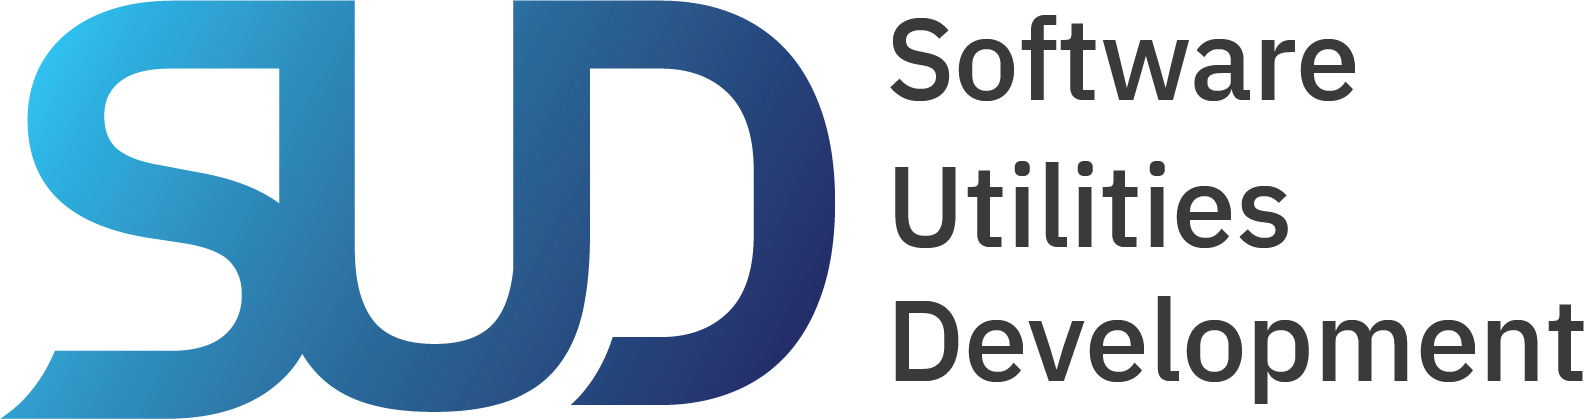 Software Utilities Development LTD (2013)